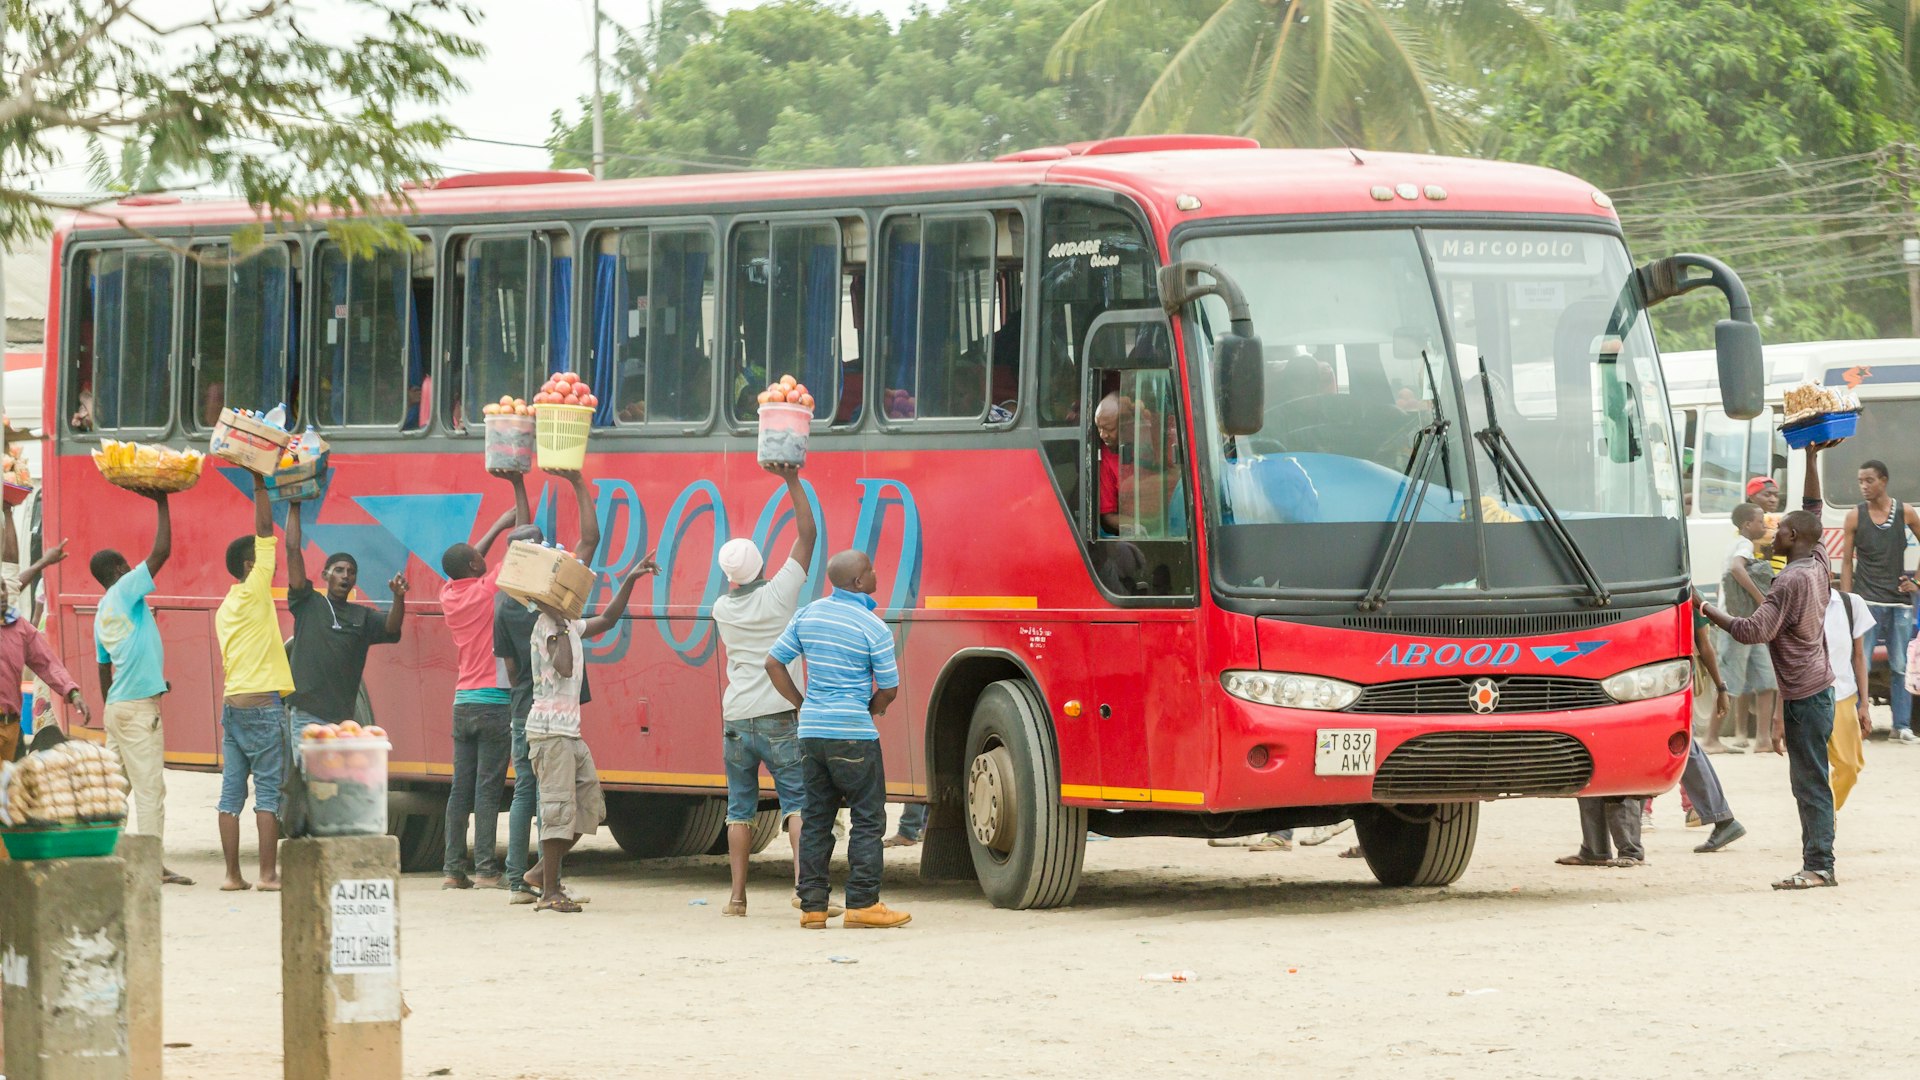 Street vendors surround a bus in Dar Es Salaam, Tanzania